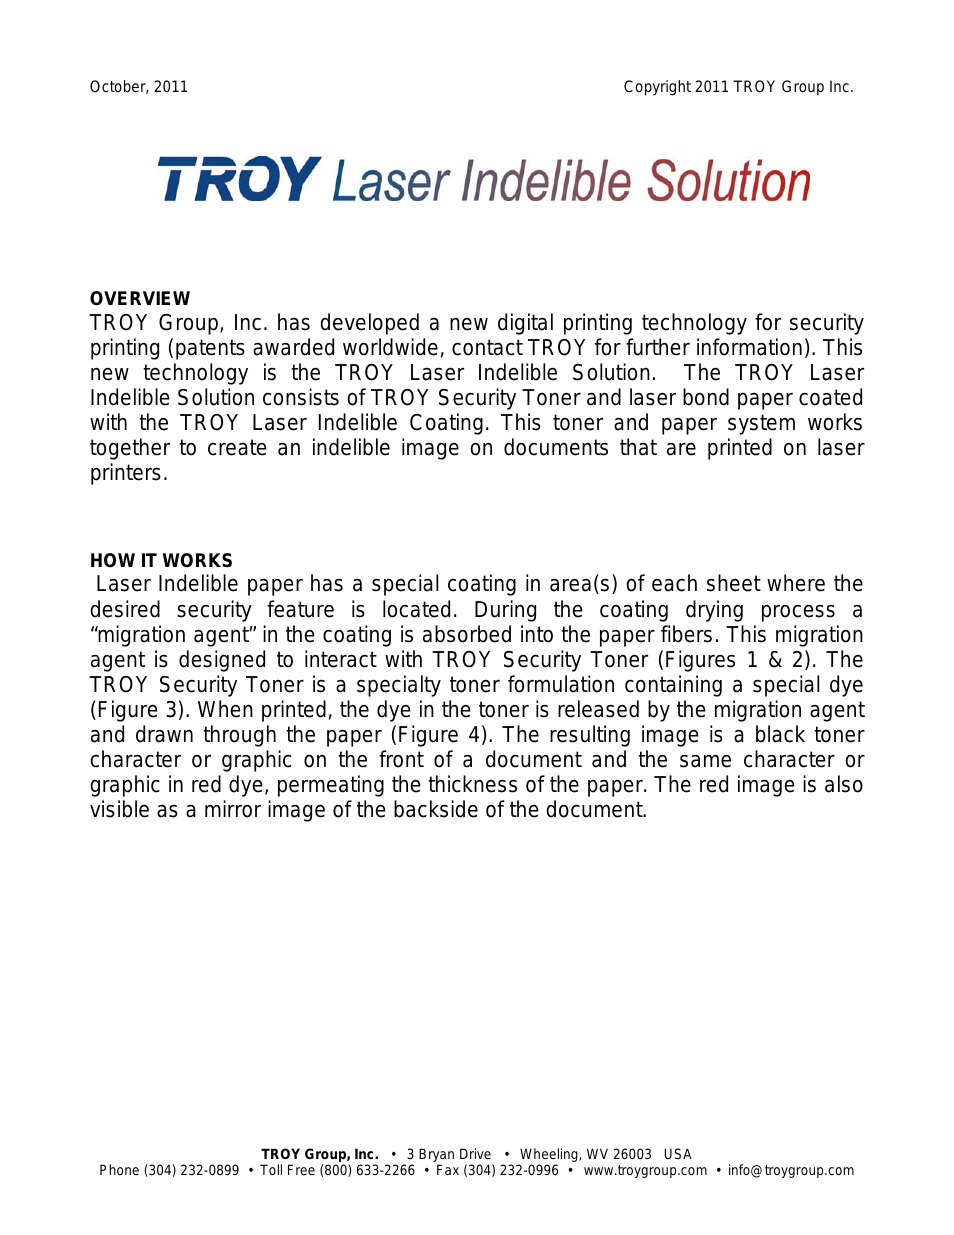 Laser Indelible Solution White Paper Datasheet